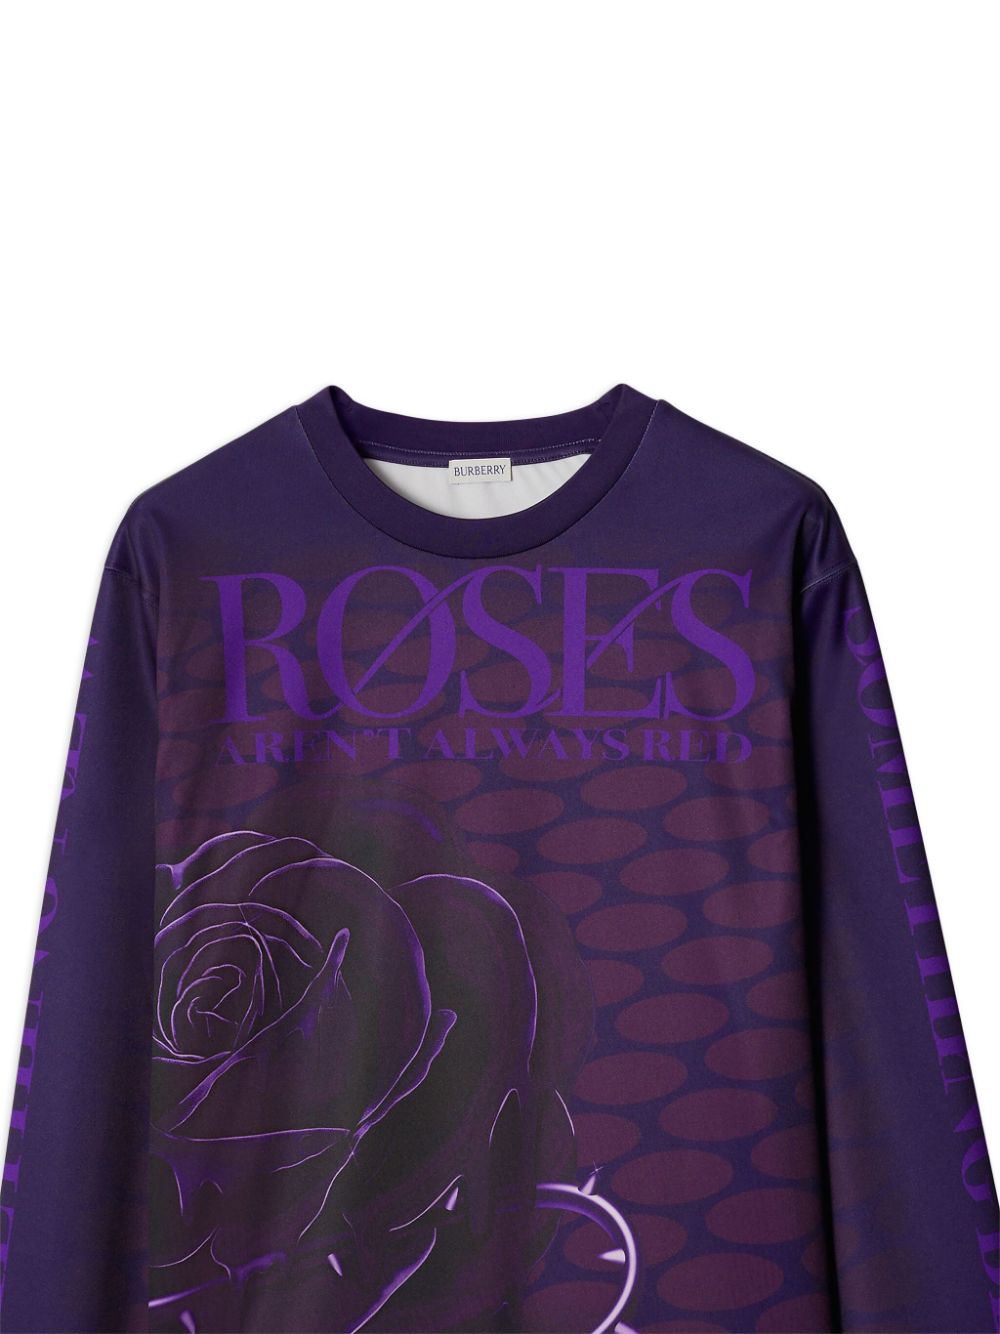 Burberry rose-print long-sleeve jumper - Paars